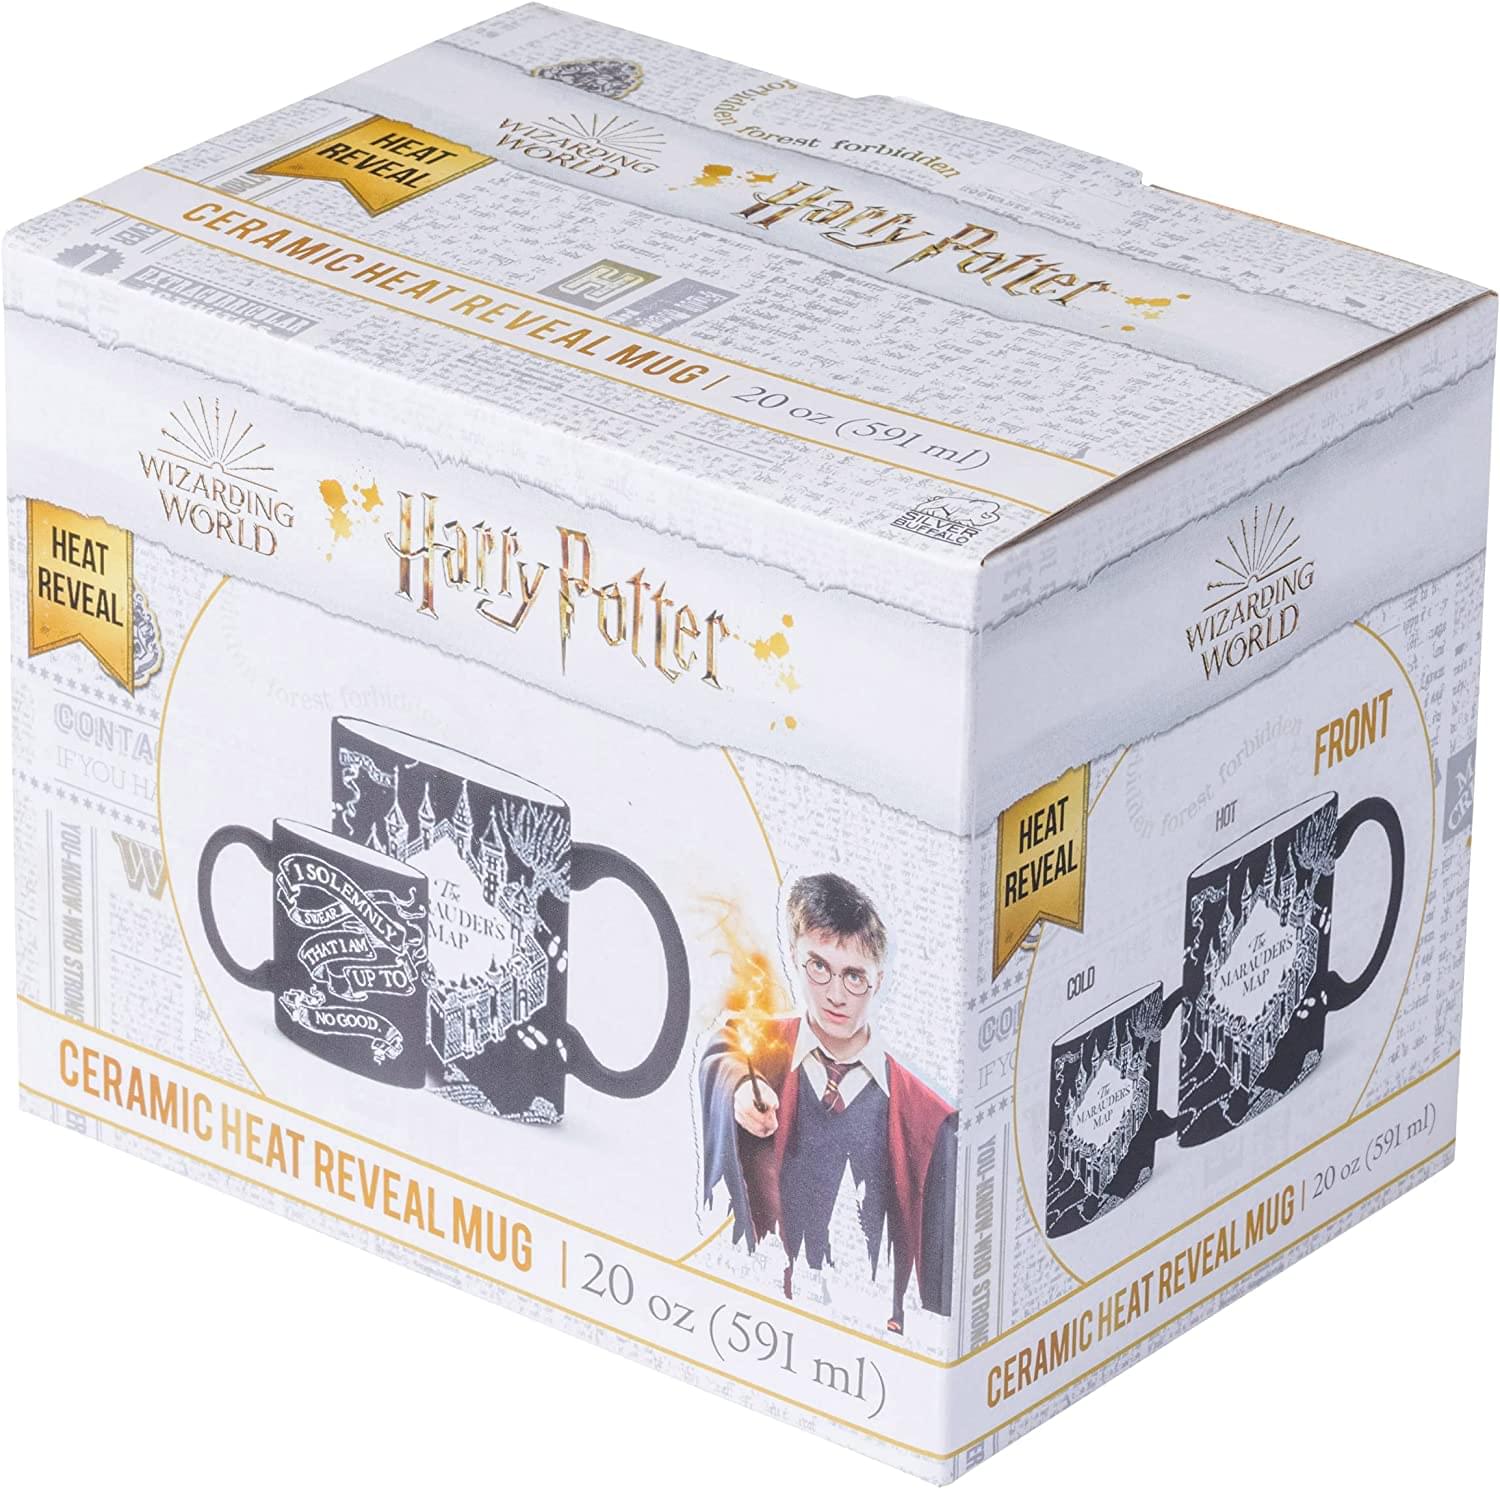 Harry Potter Marauder's Map Jumbo Ceramic Heat Reveal Mug | Holds 20 Ounces